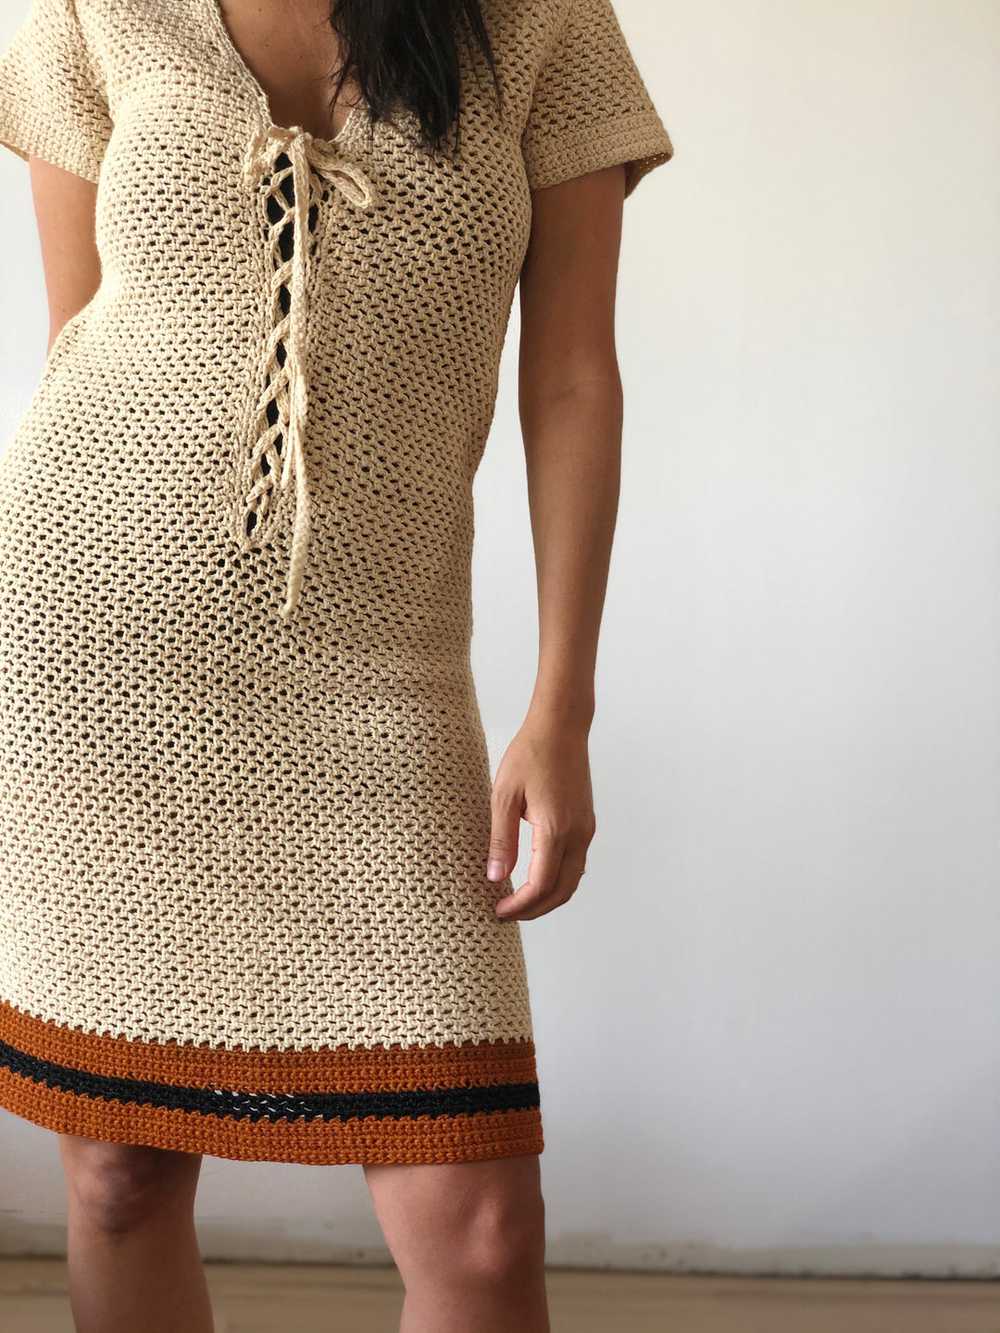 Couture 70s crochet dress - image 4